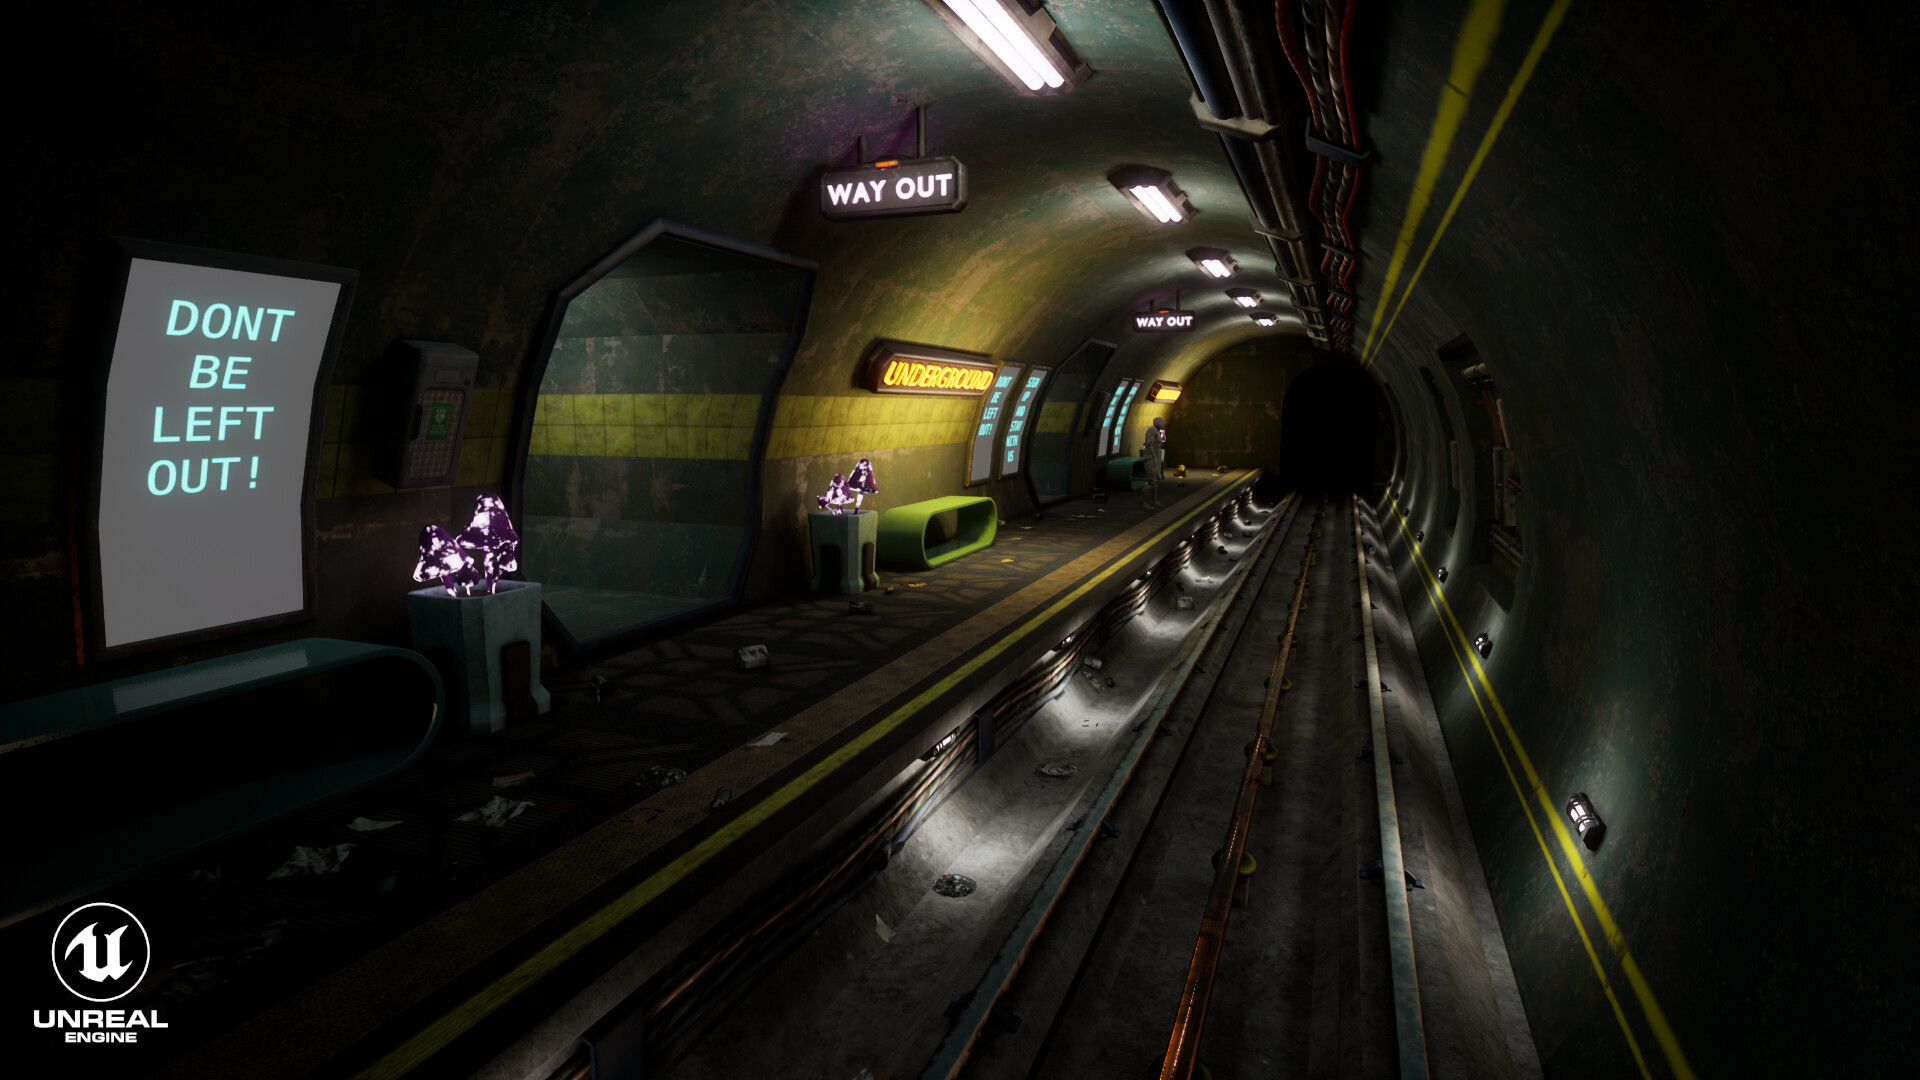 Image of Sci-Fi Underground Station Environment